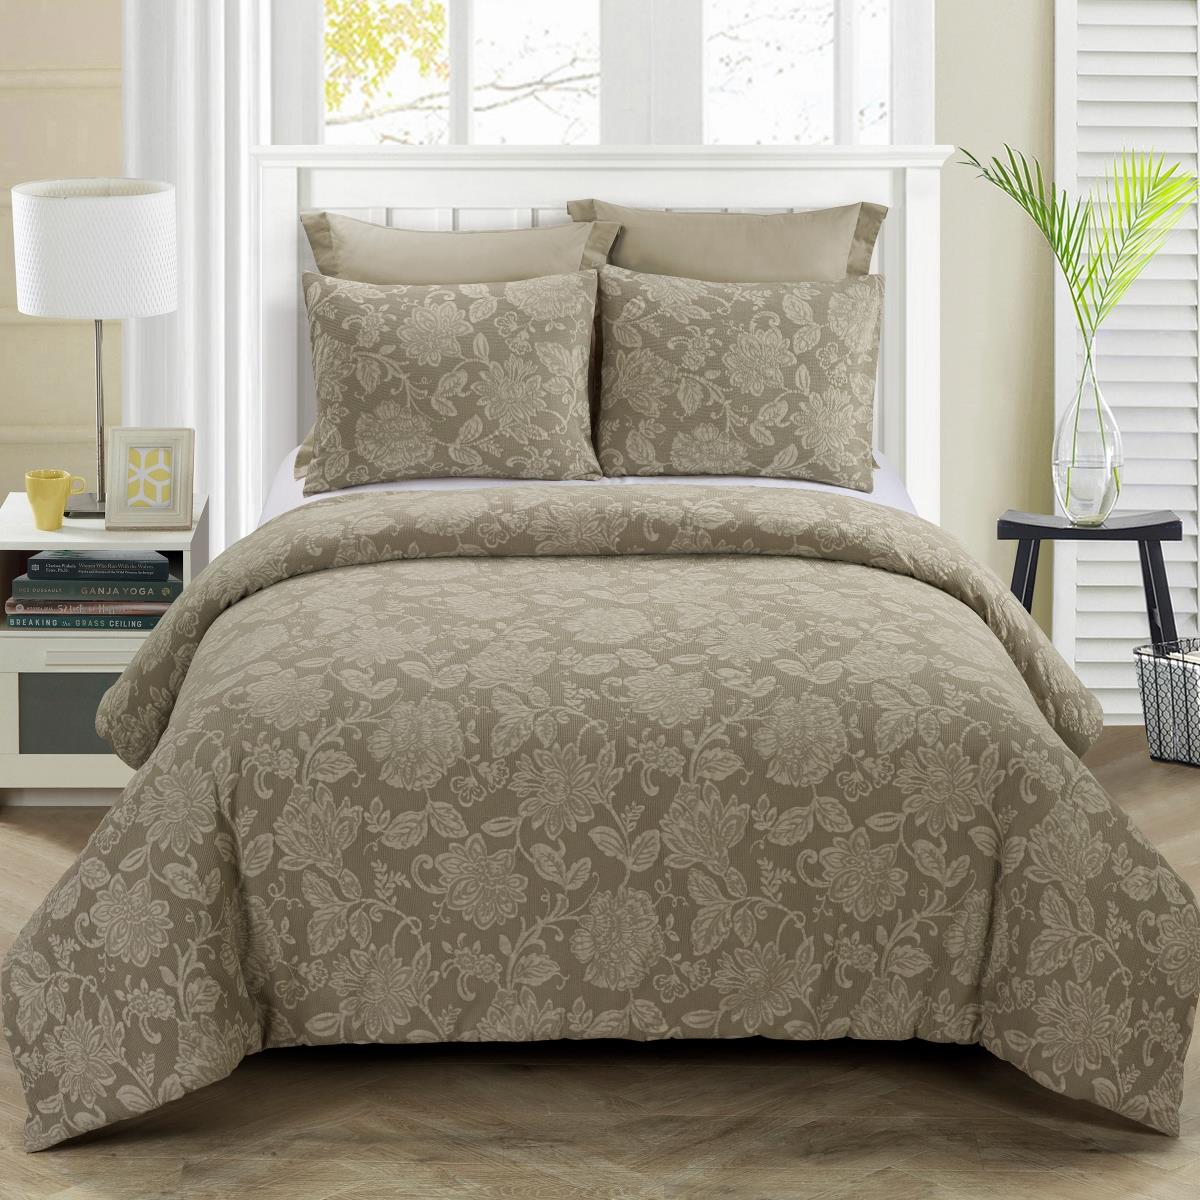 Y00401 King Size Comforter Set - Amadora Taupe